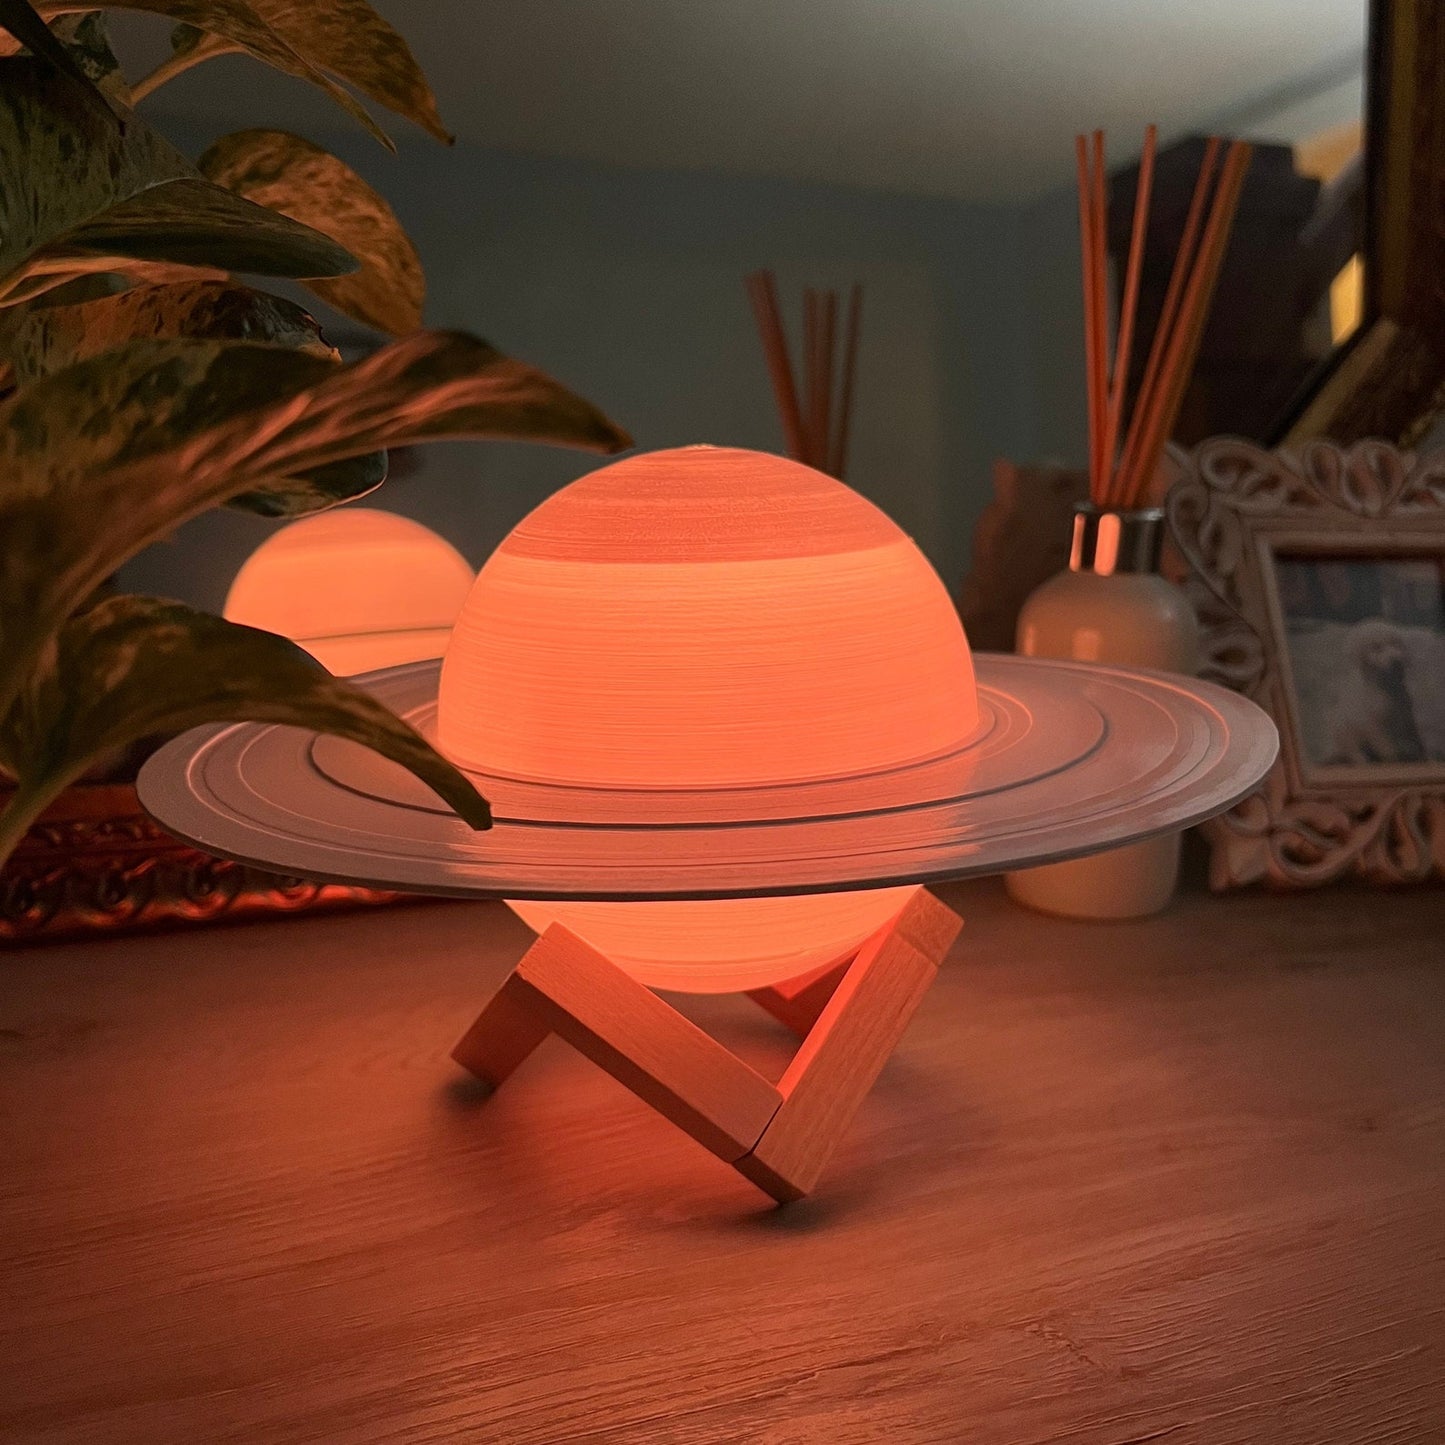 Saturn Lamp